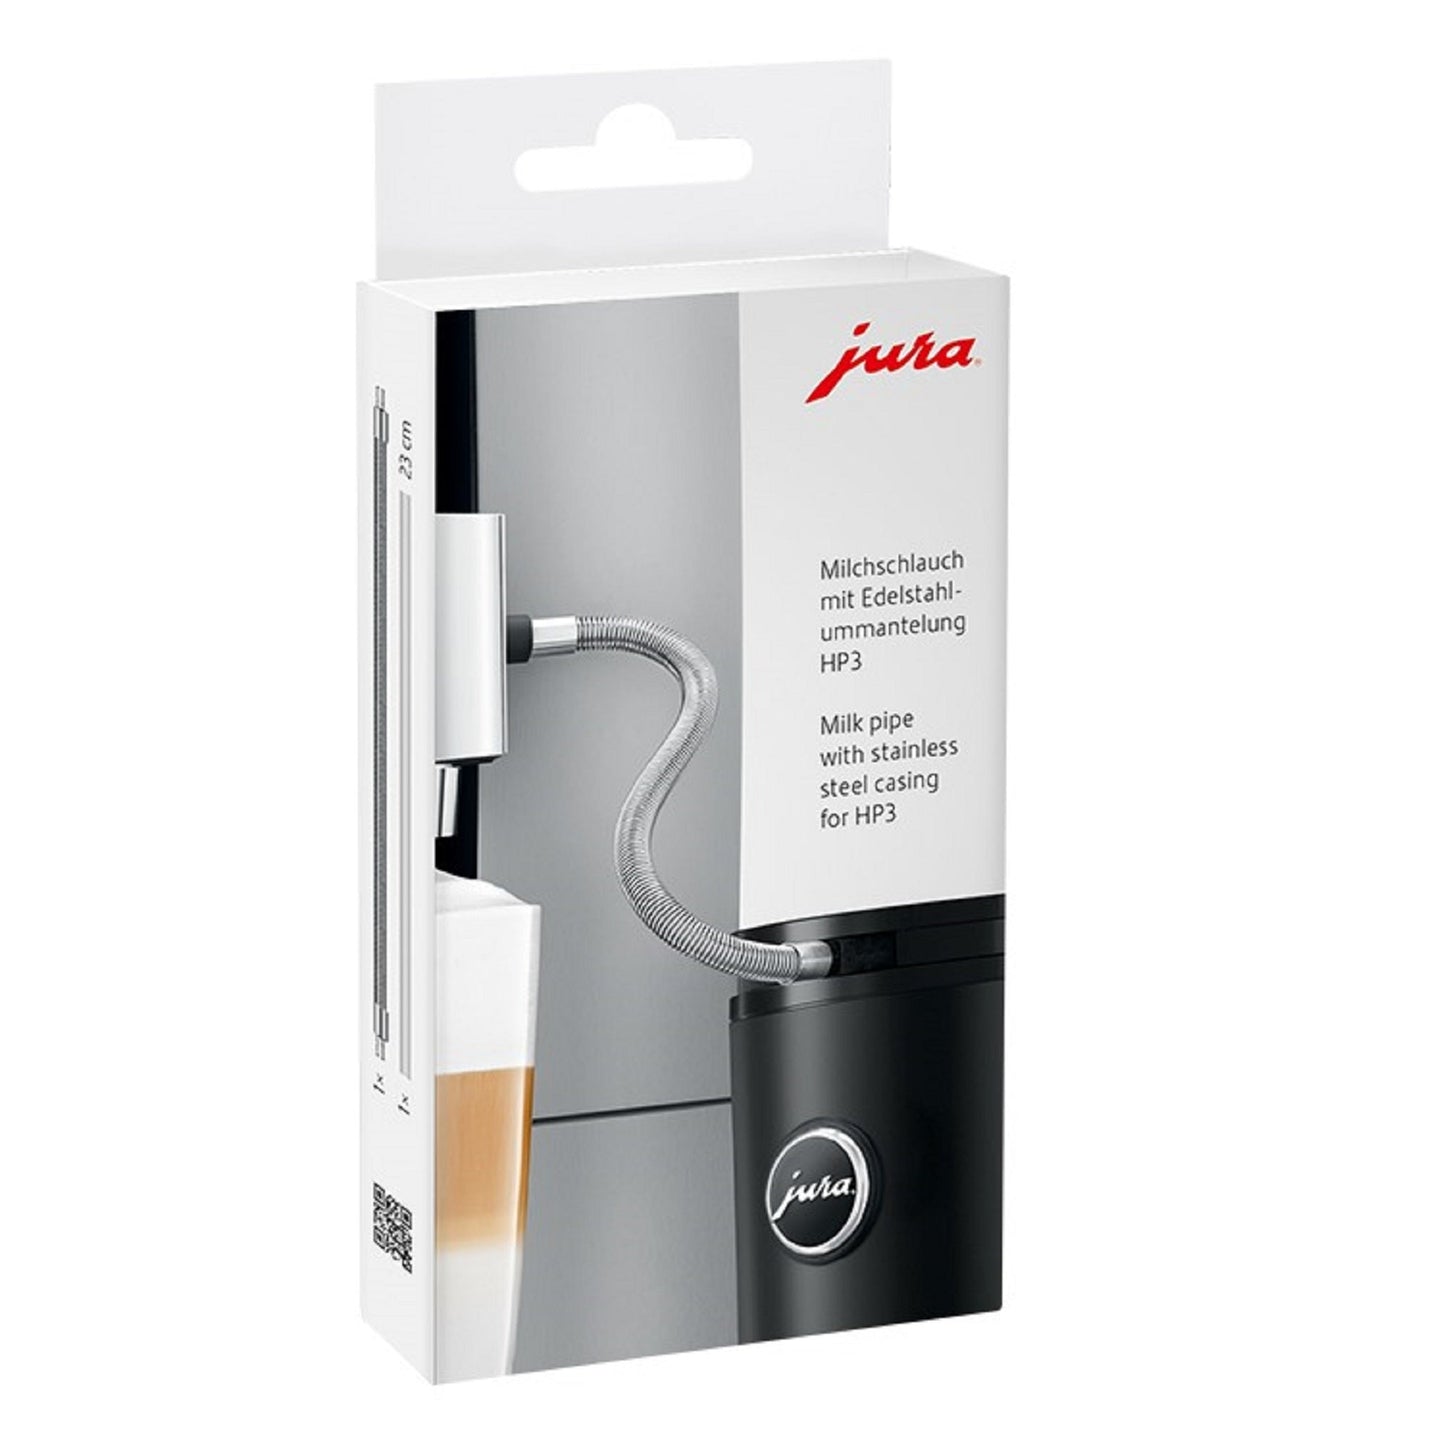 Jura Milk Pipe with Stainless Steel Casing - HP3 - Velo Coffee Roasters